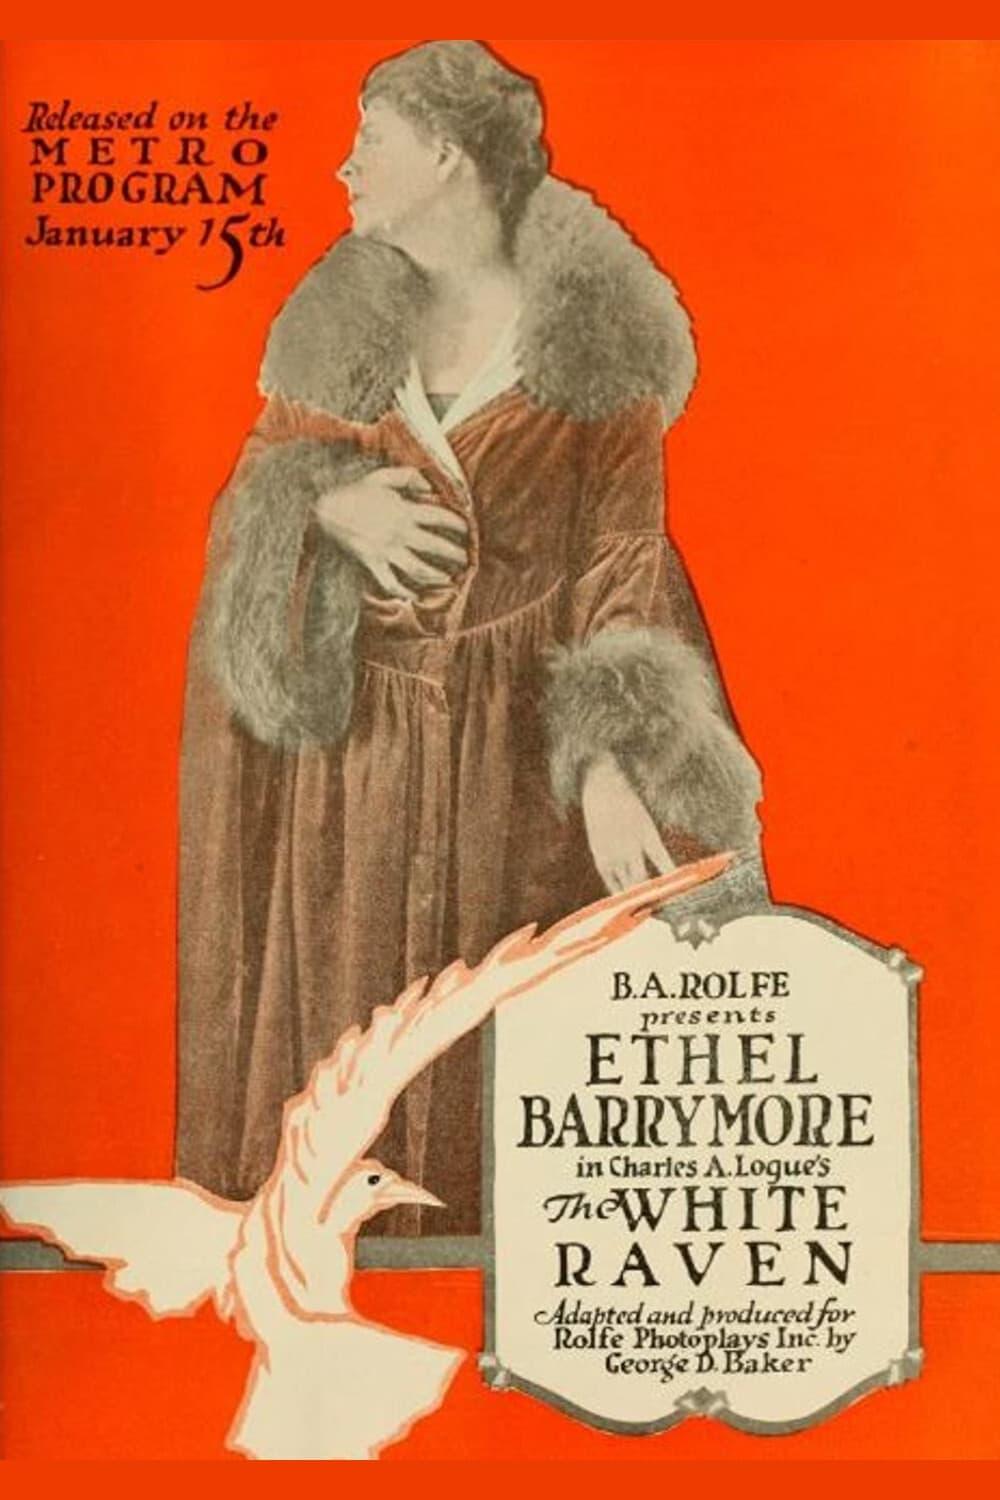 The White Raven poster